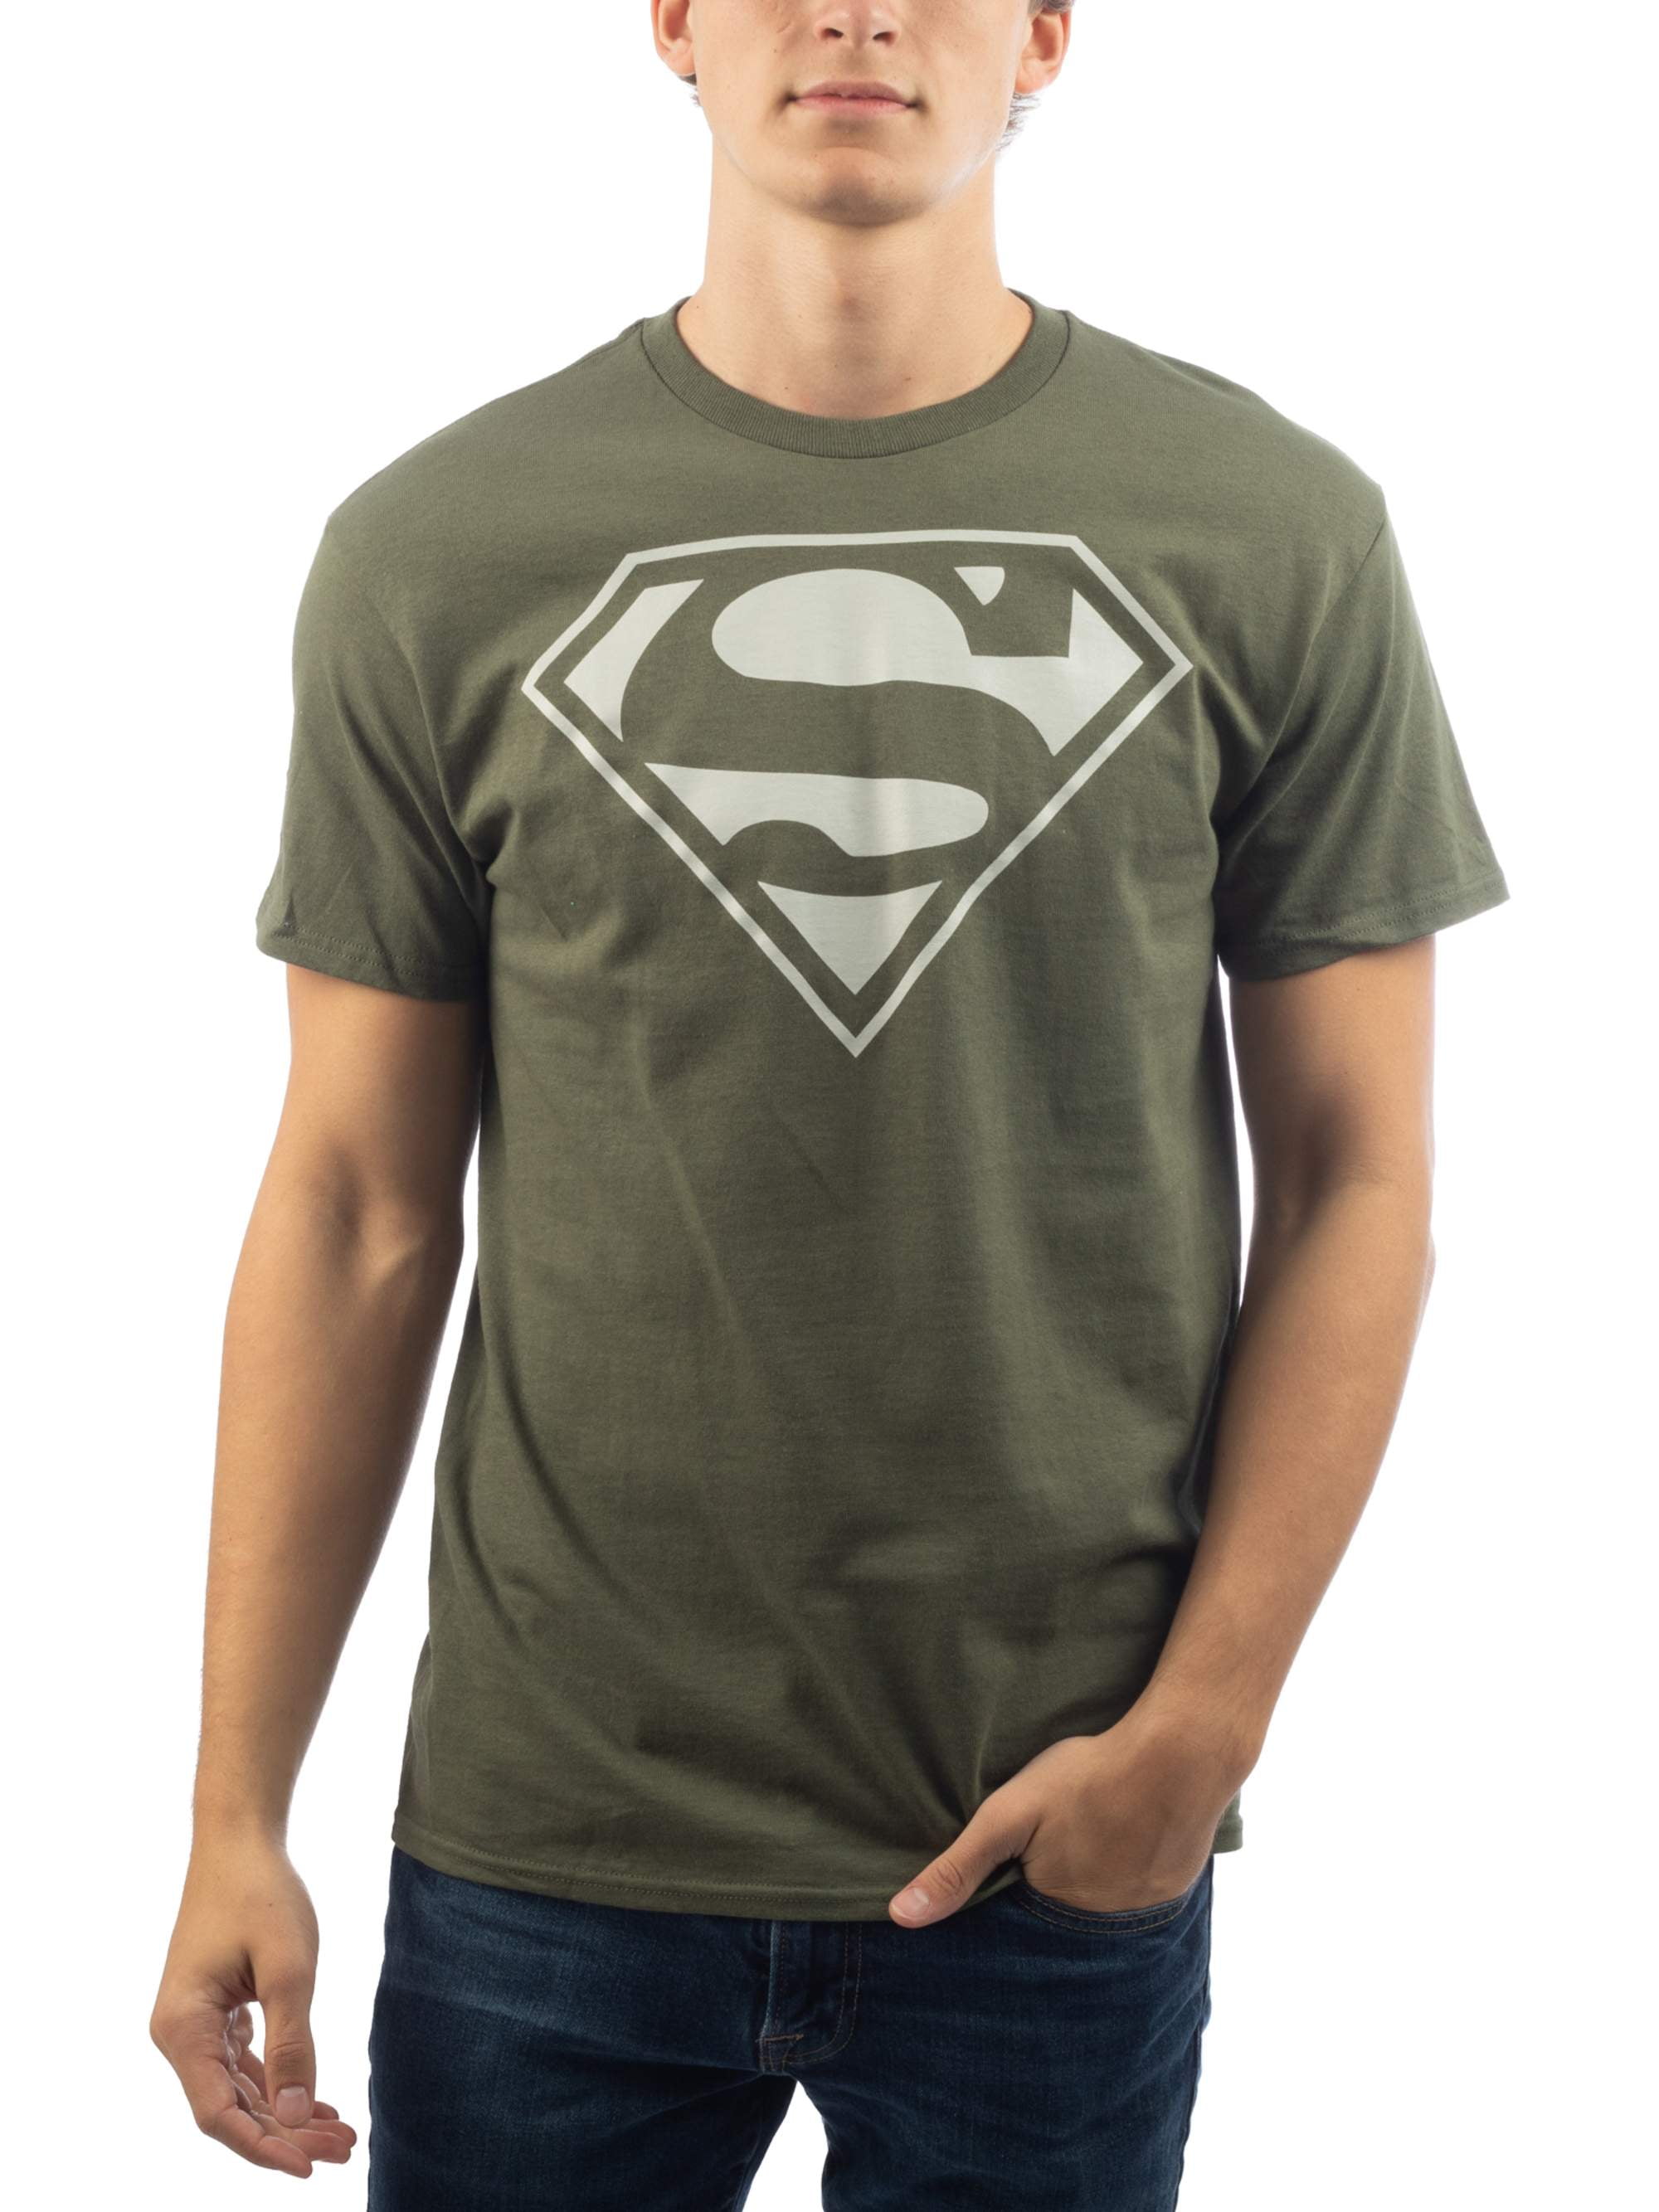 Superman Classic Logo Licensed Hoodie Hooded Sweatshirt Adult Sizes S-2XL